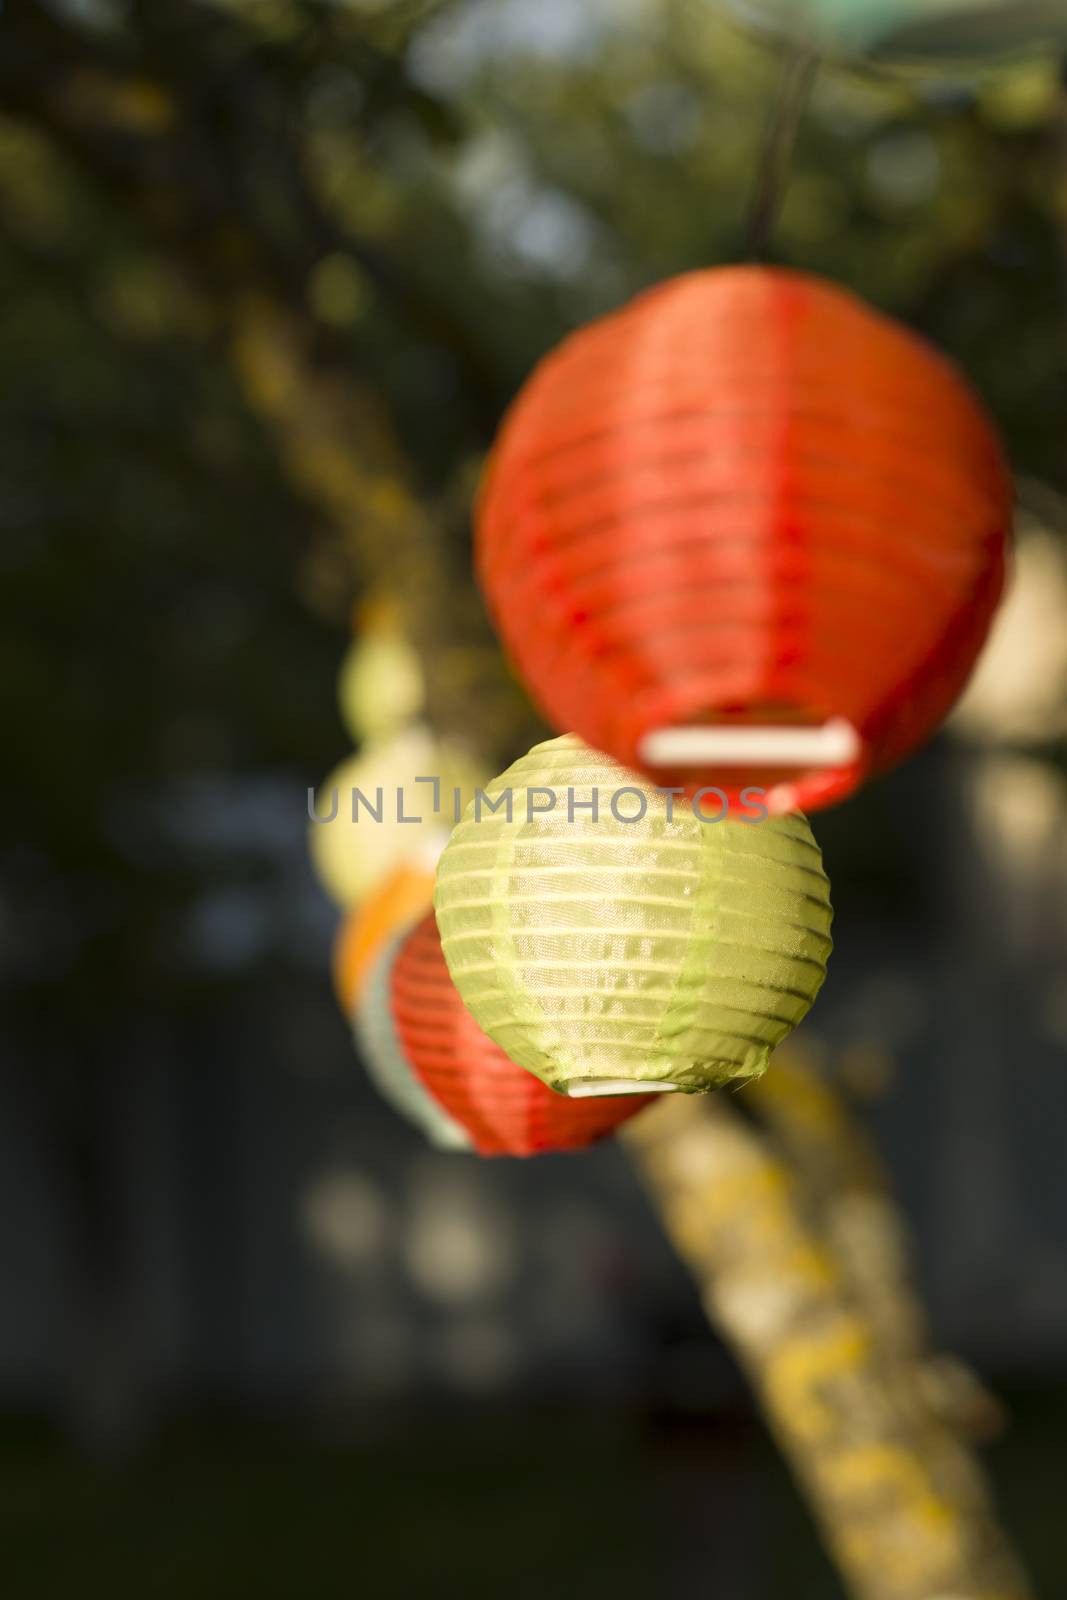 Lantern in the yard on the tree bokeh background, night and warm light, hanging lanterns. by Taidundua